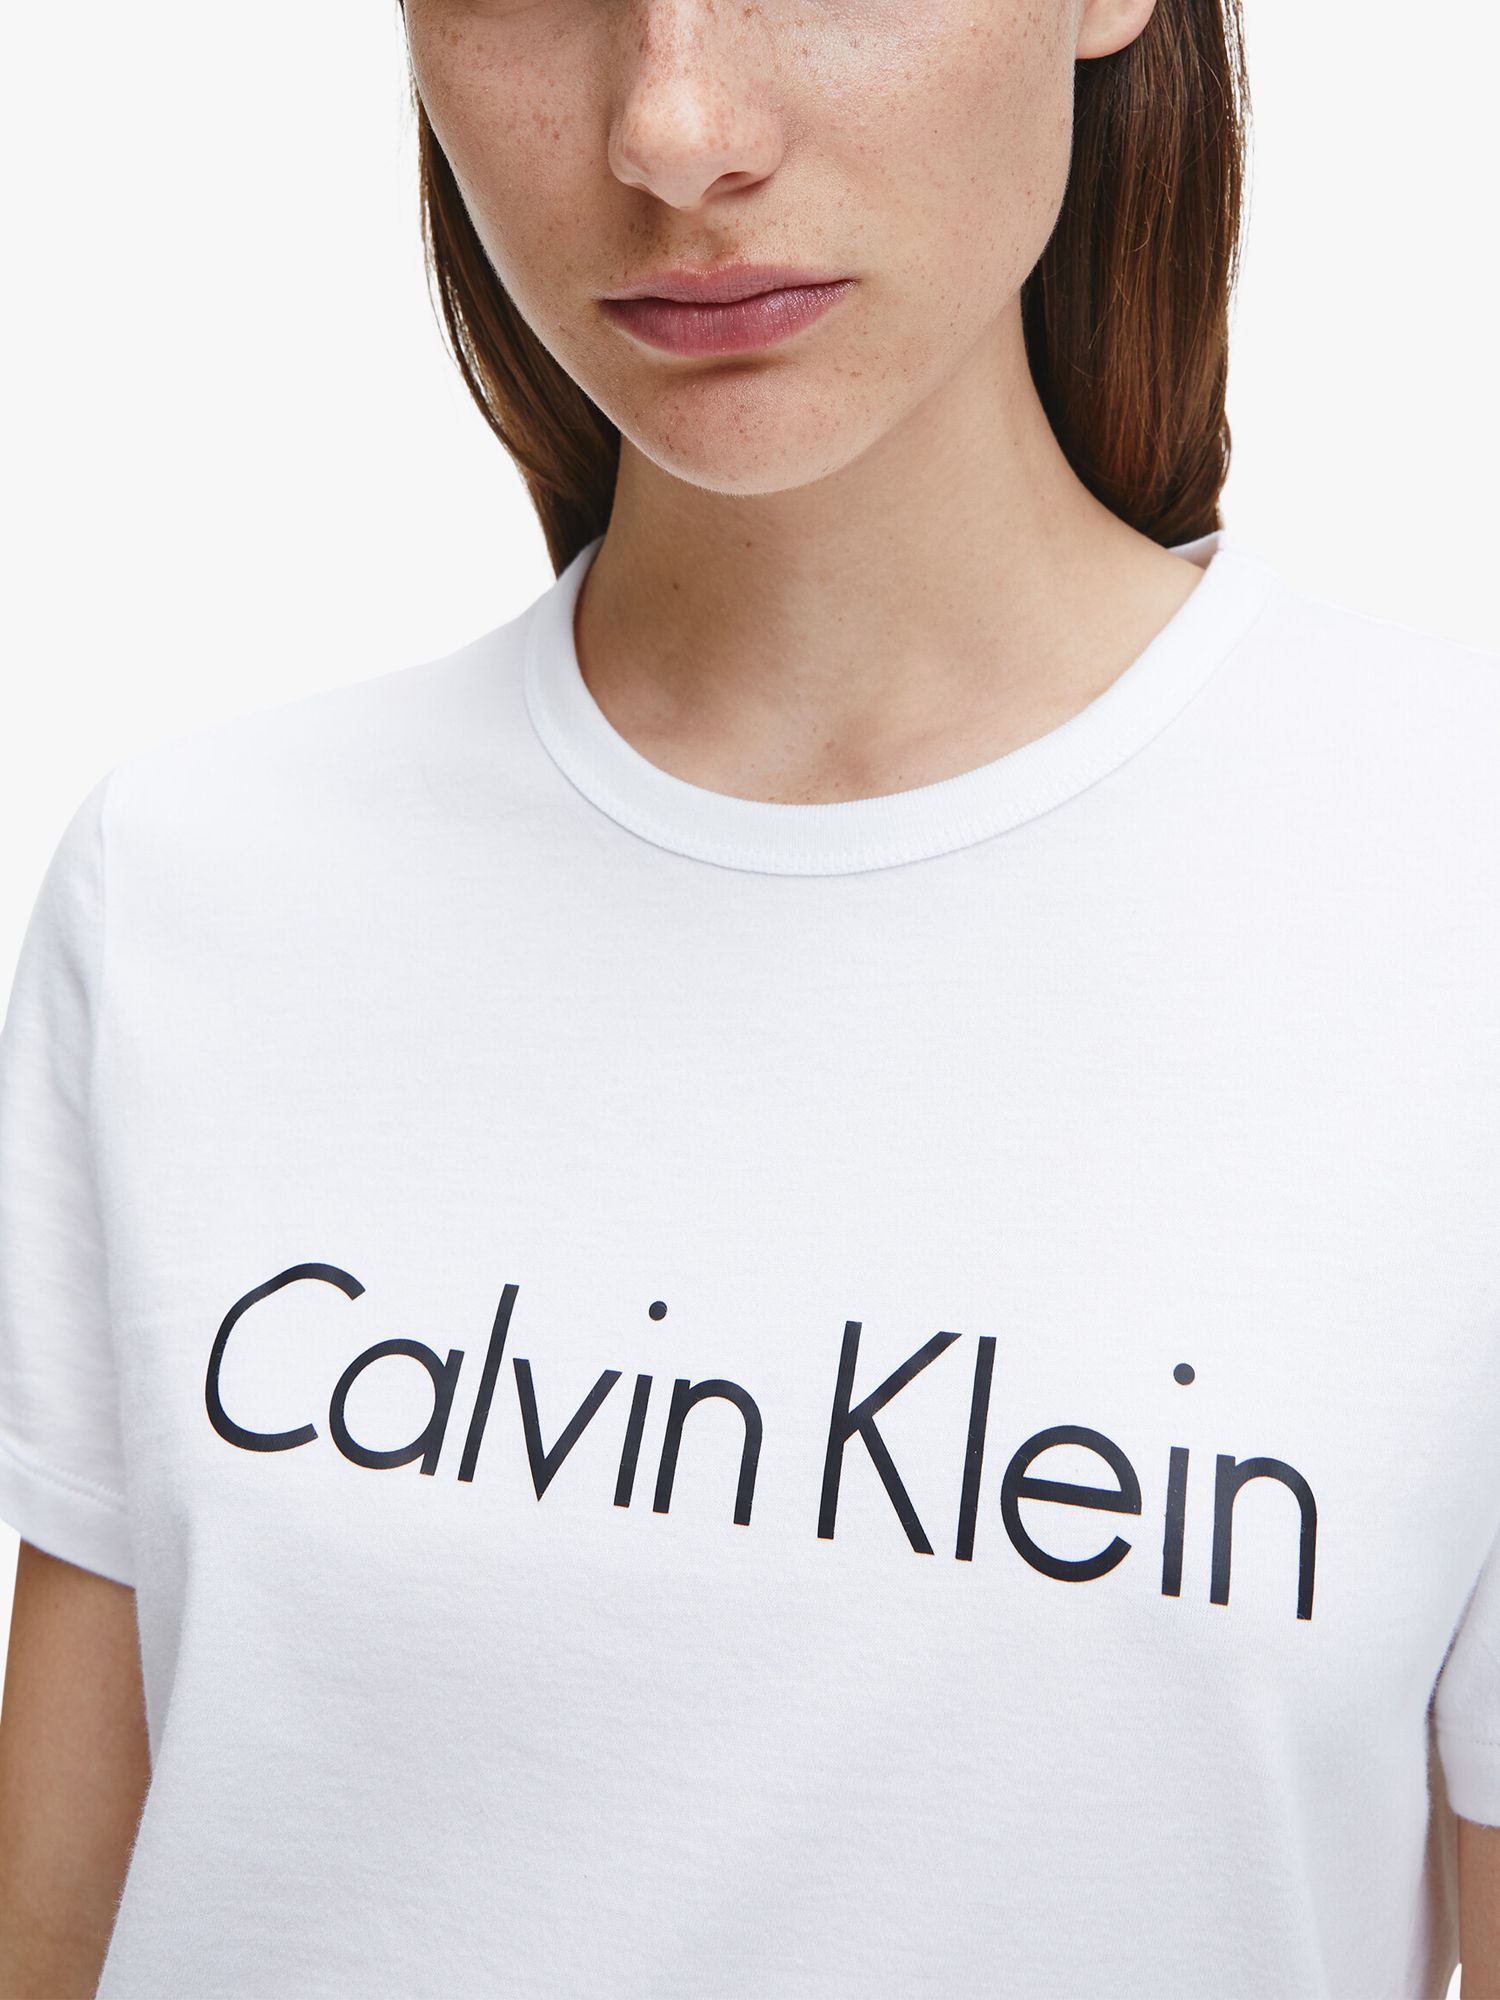 Calvin Klein white T Shirt, Men's Fashion, Tops & Sets, Tshirts